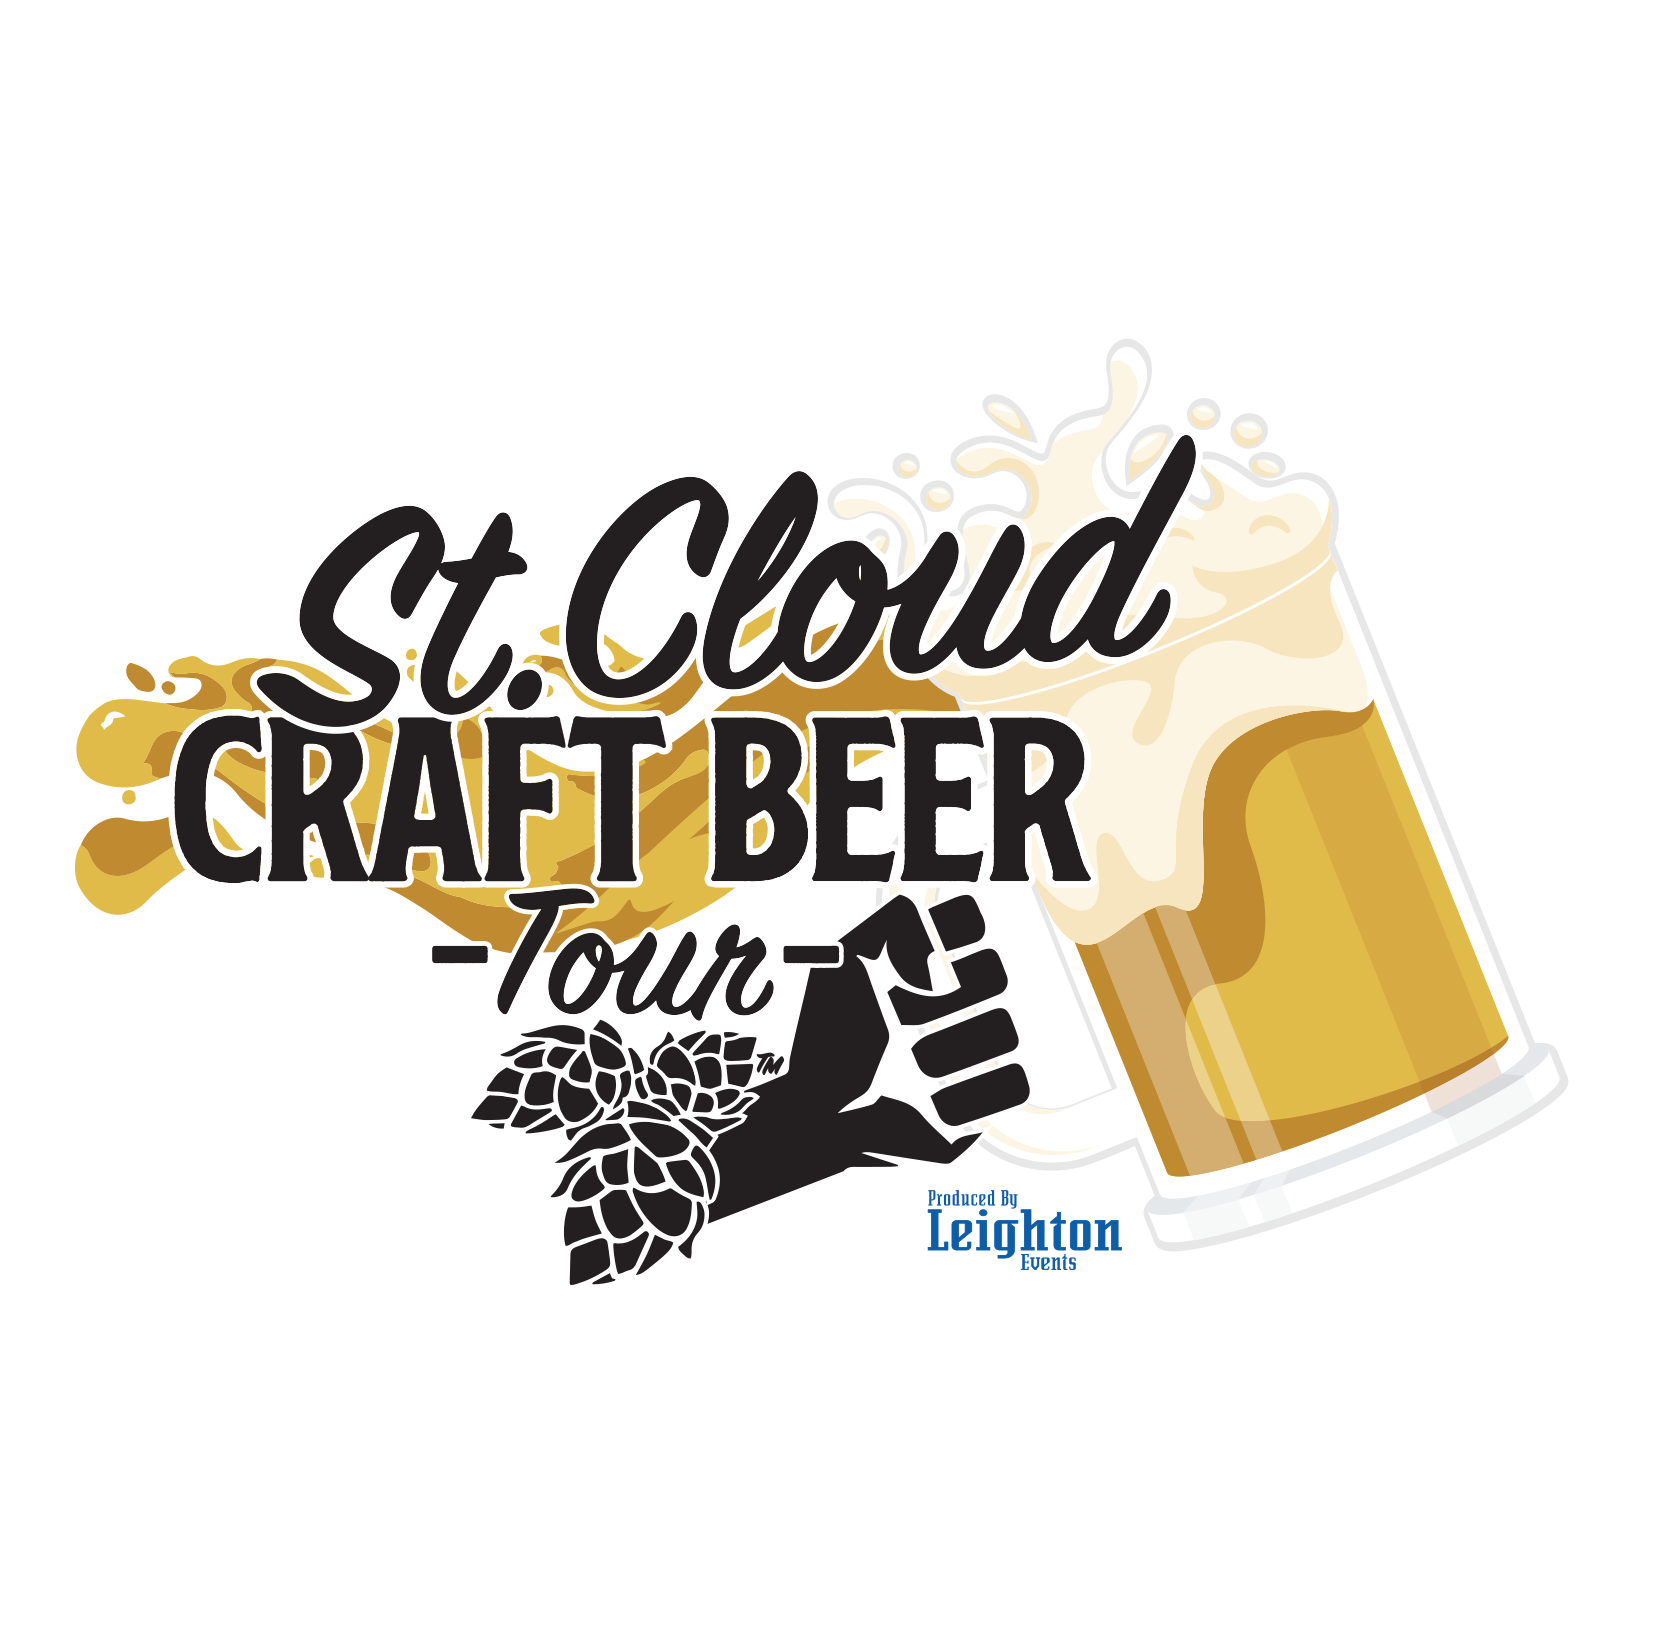 St. Cloud Craft Beer Tour